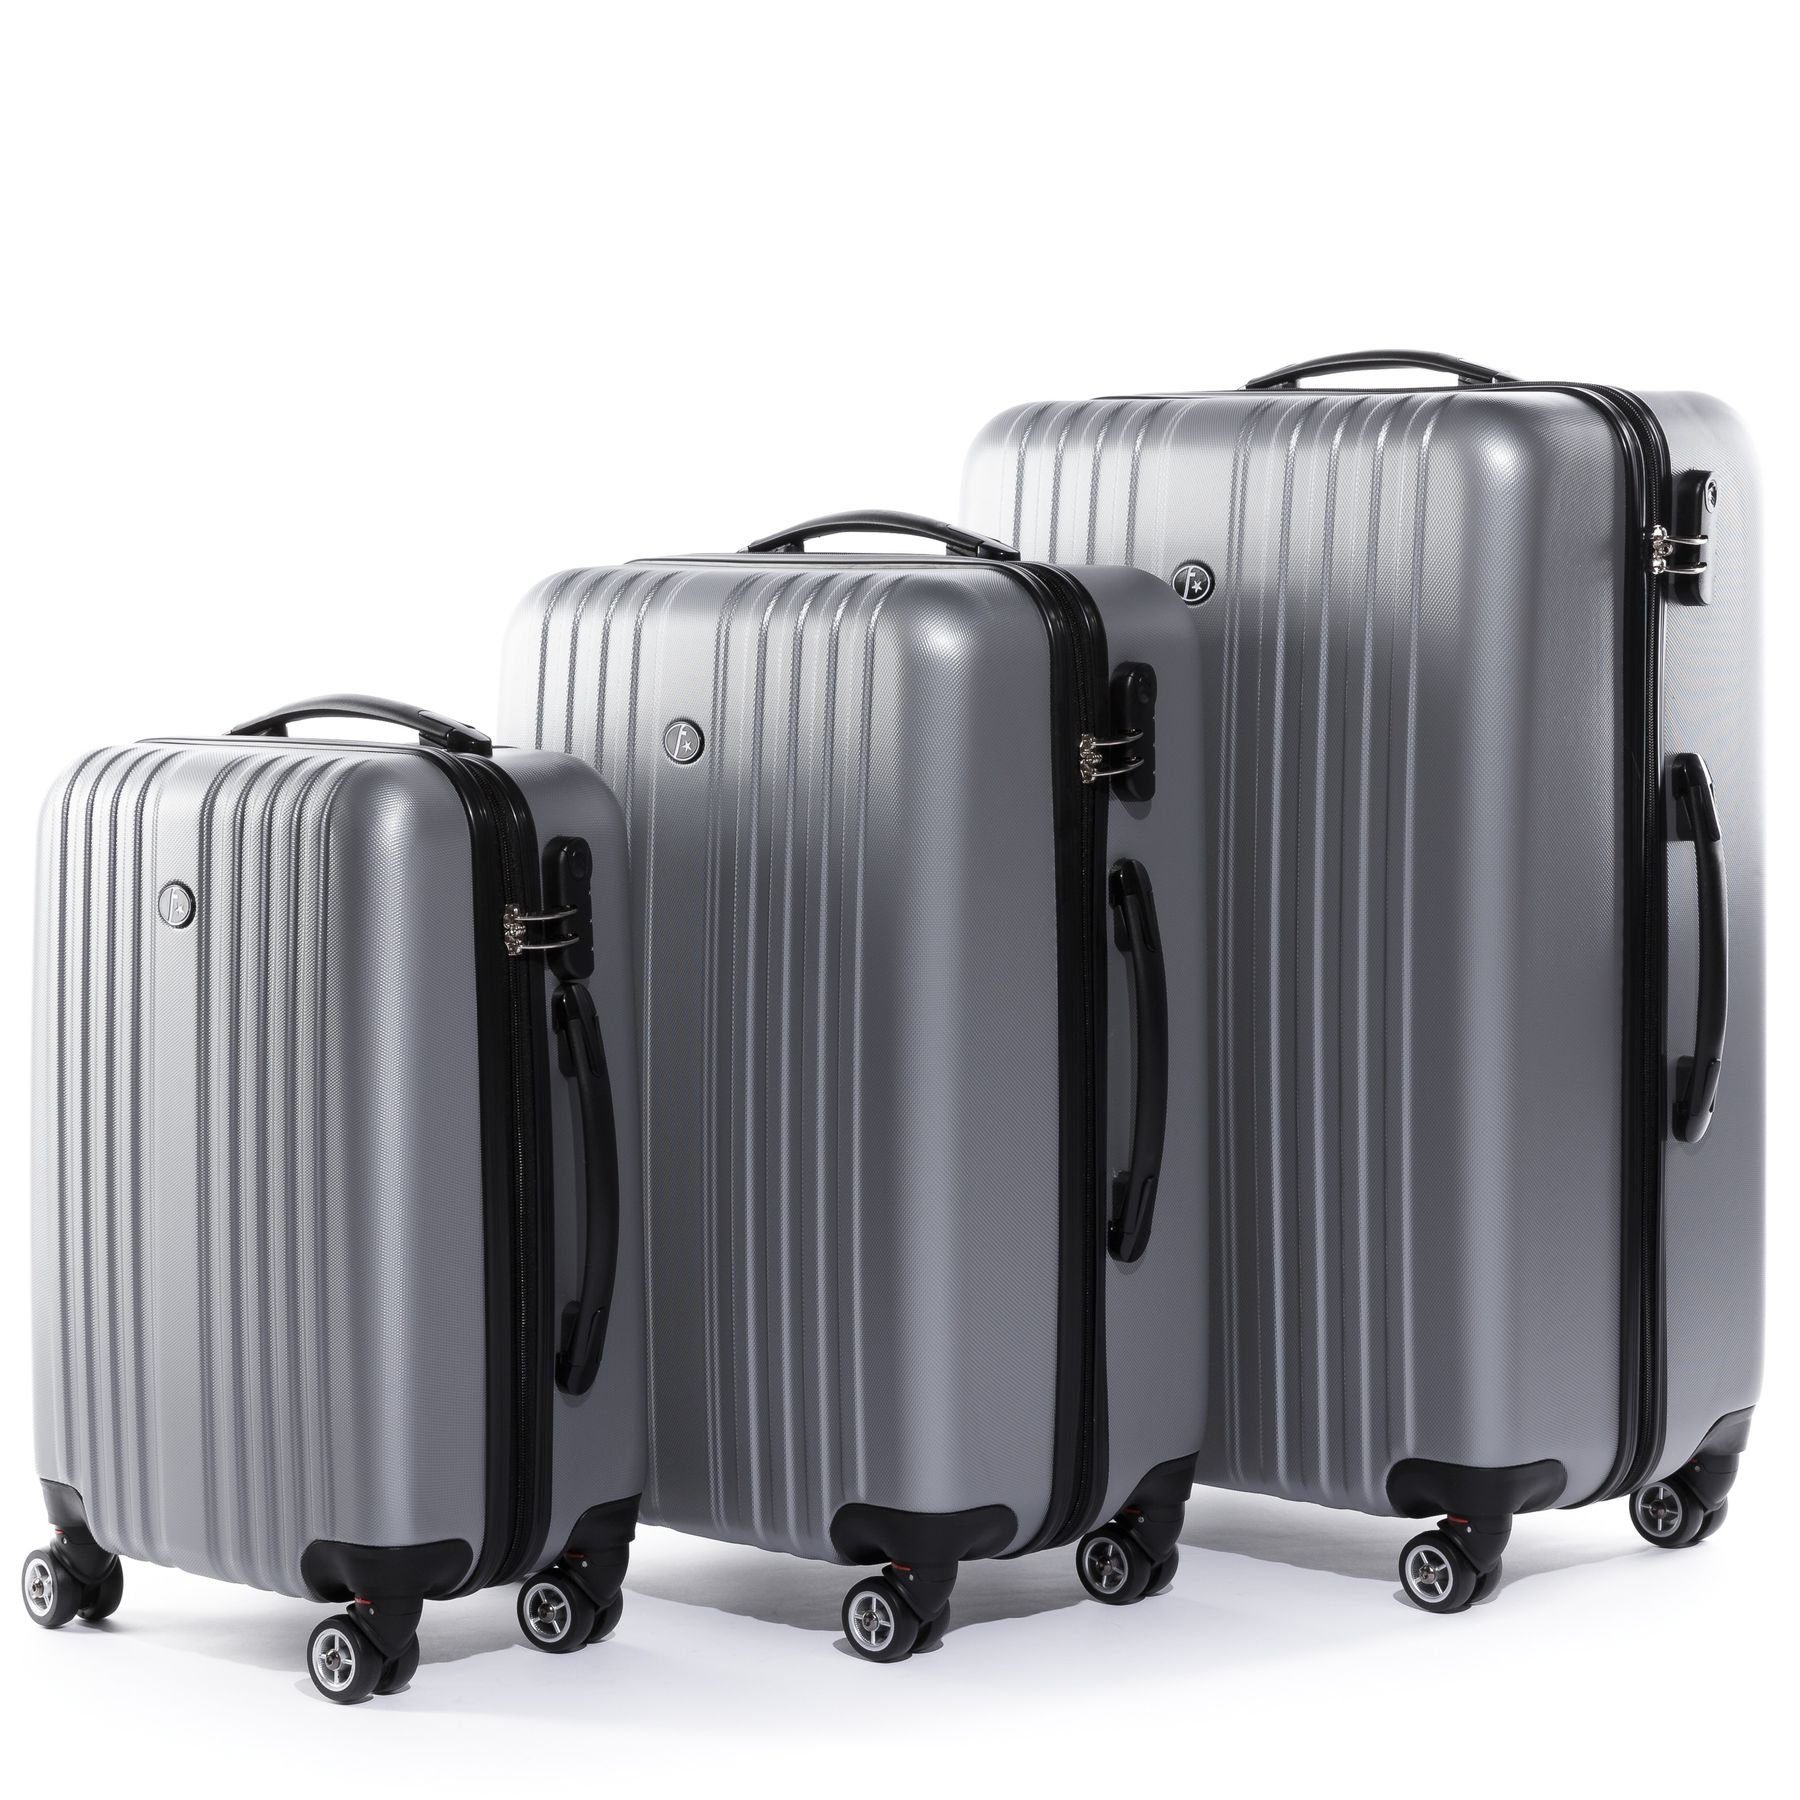 FERGÉ Kofferset 3 teilig 4 Toulouse, Hartschale Koffer Set, Rollkoffer Trolley 3er Reisekoffer Rollen, Premium